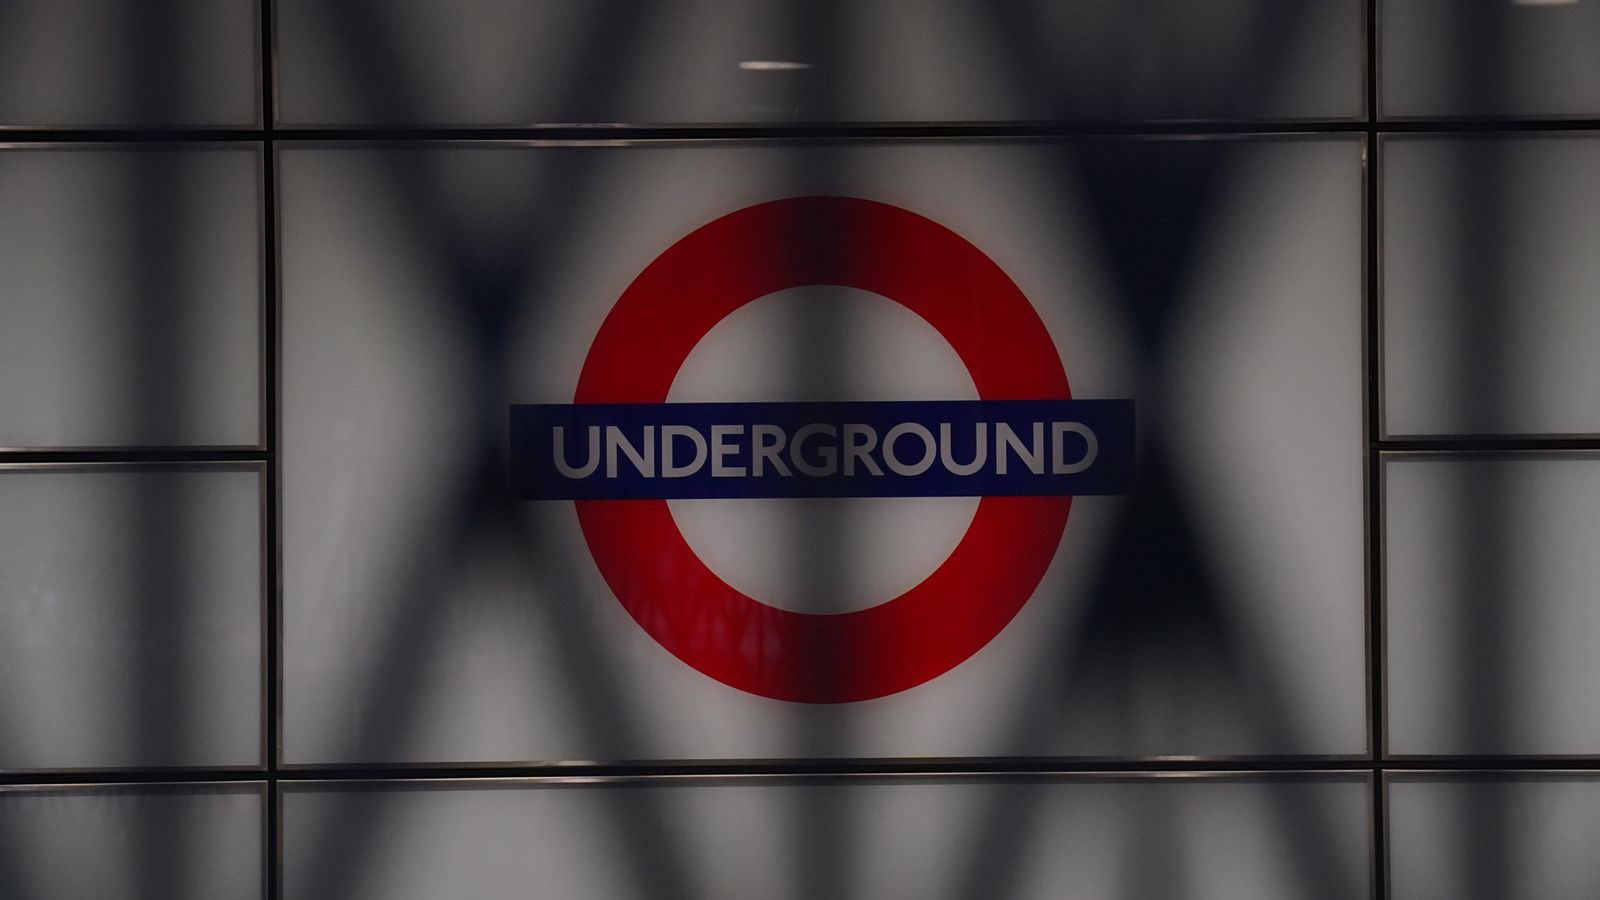 Tube strike: Planned London Underground walkouts next week suspended after talks progress | UK News